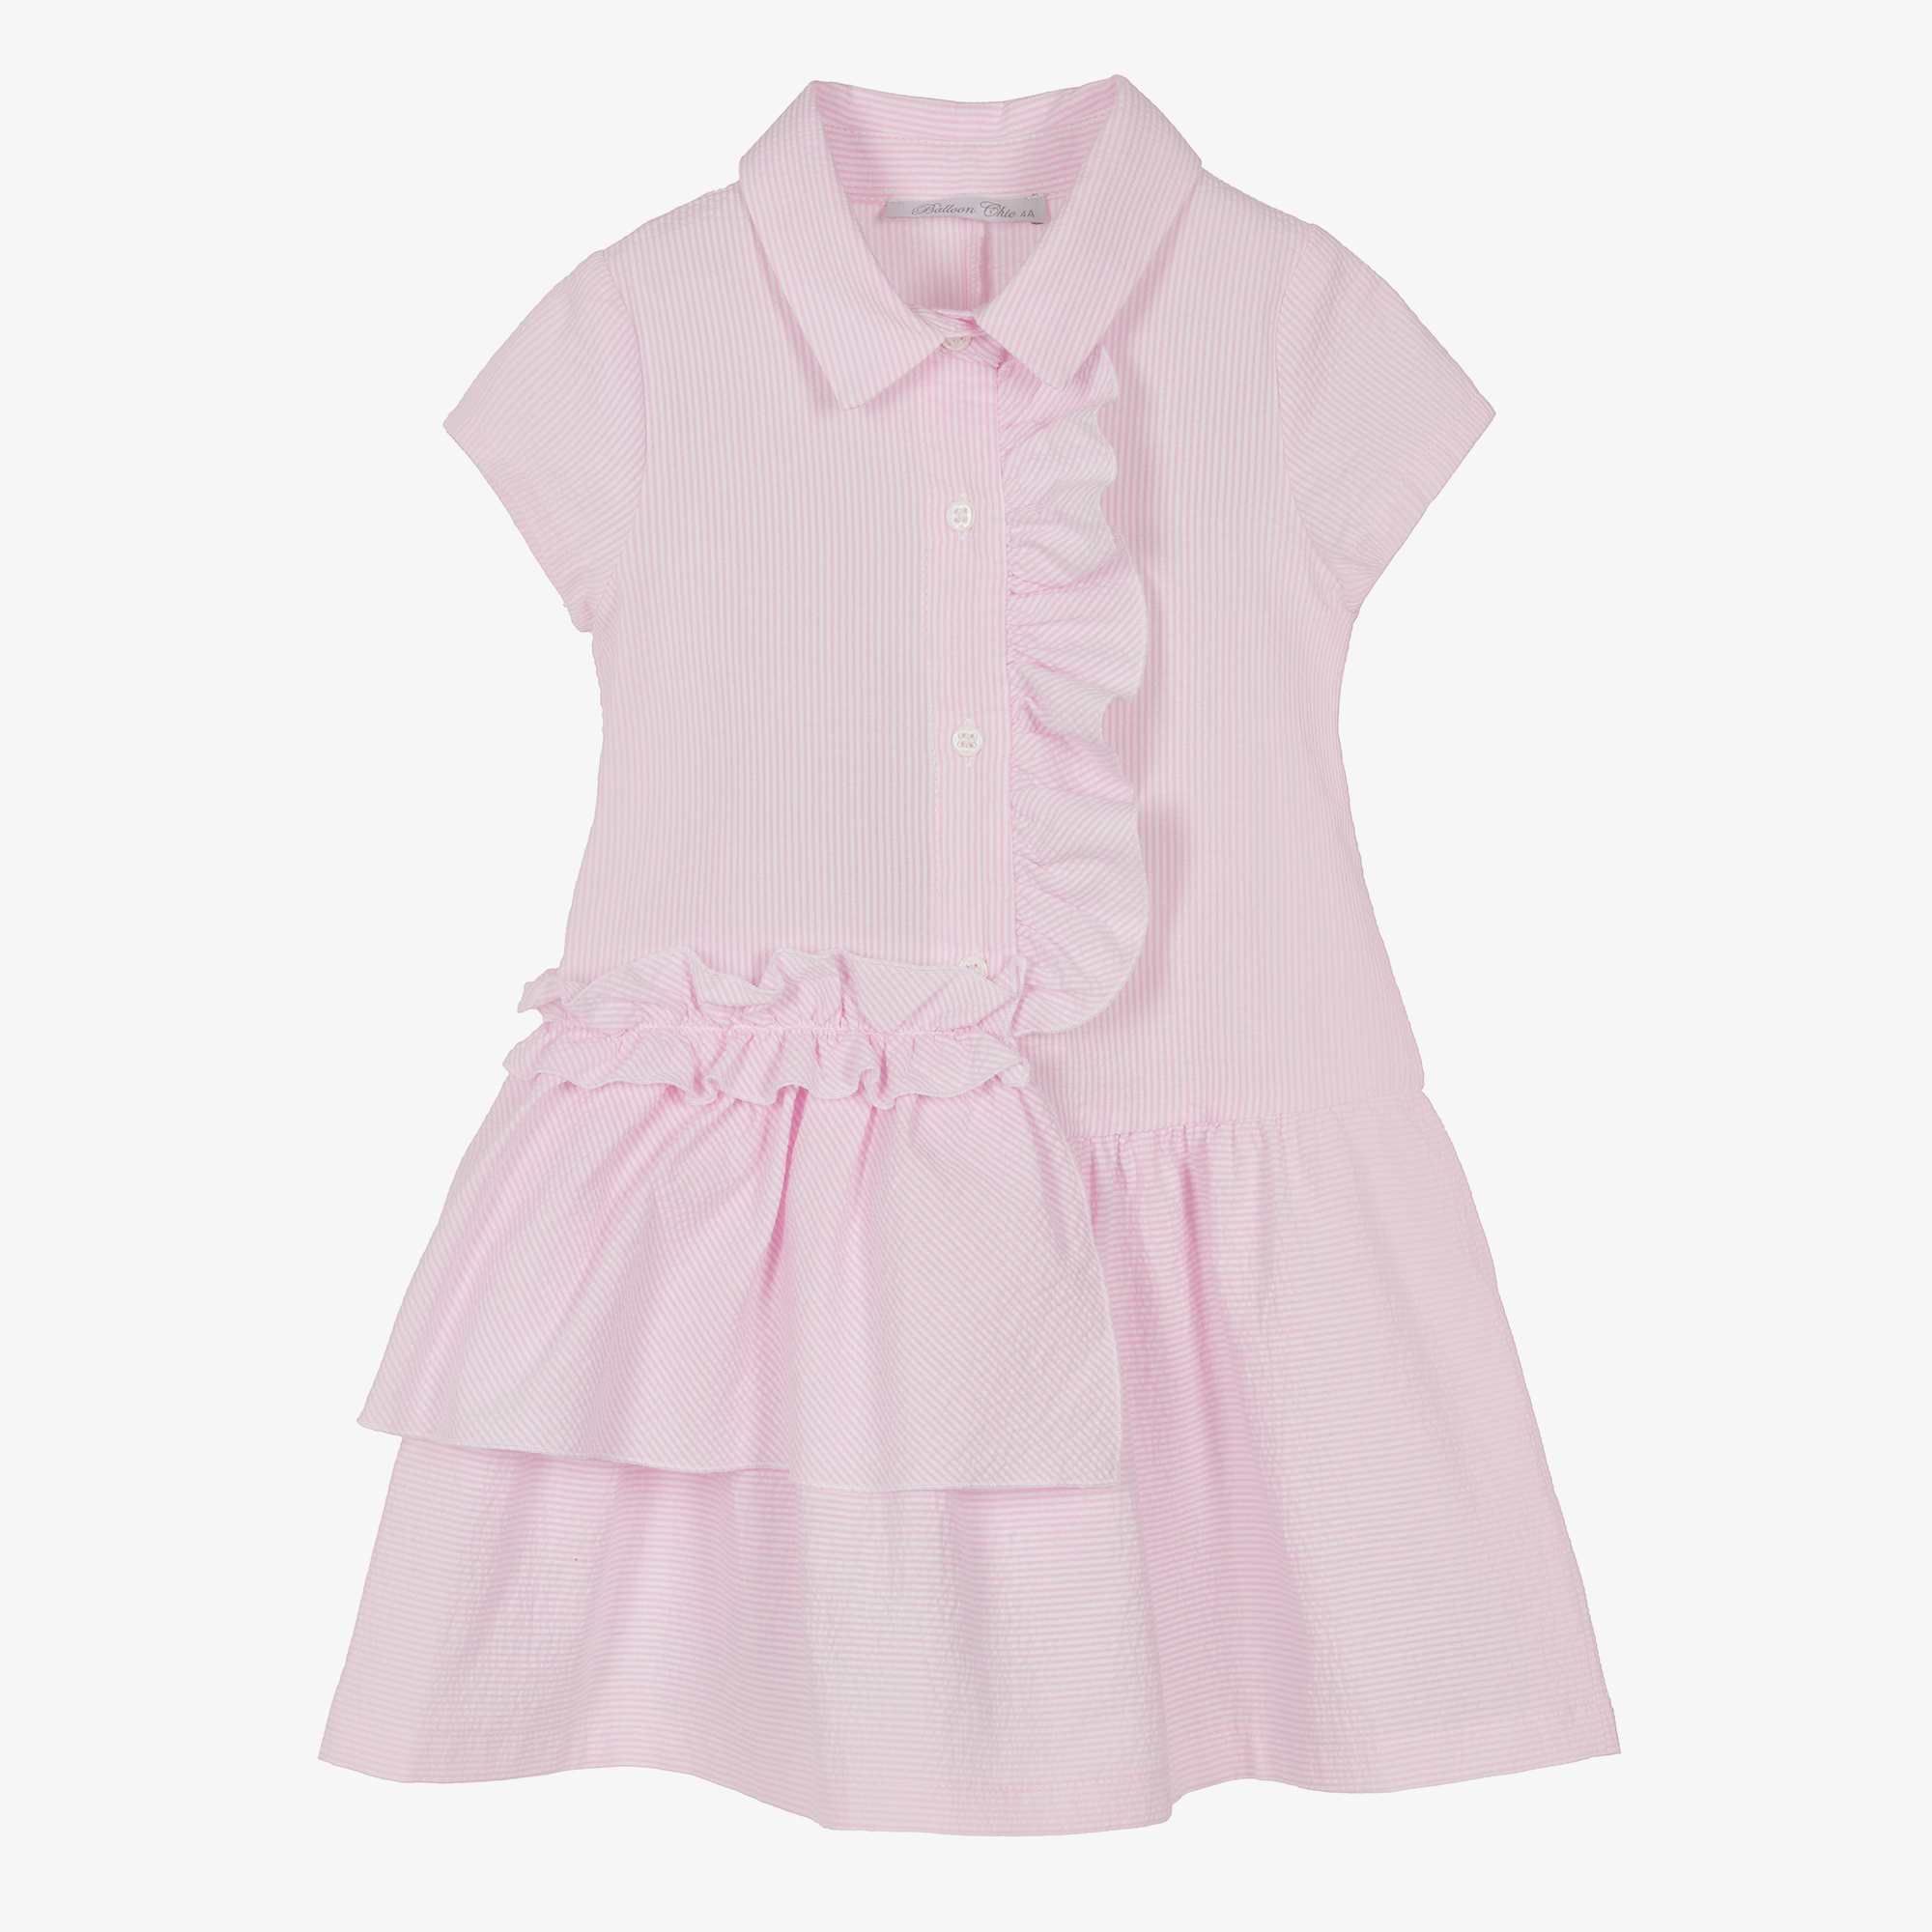 Balloon Chic - Pale Pink Tulle Dress | Childrensalon